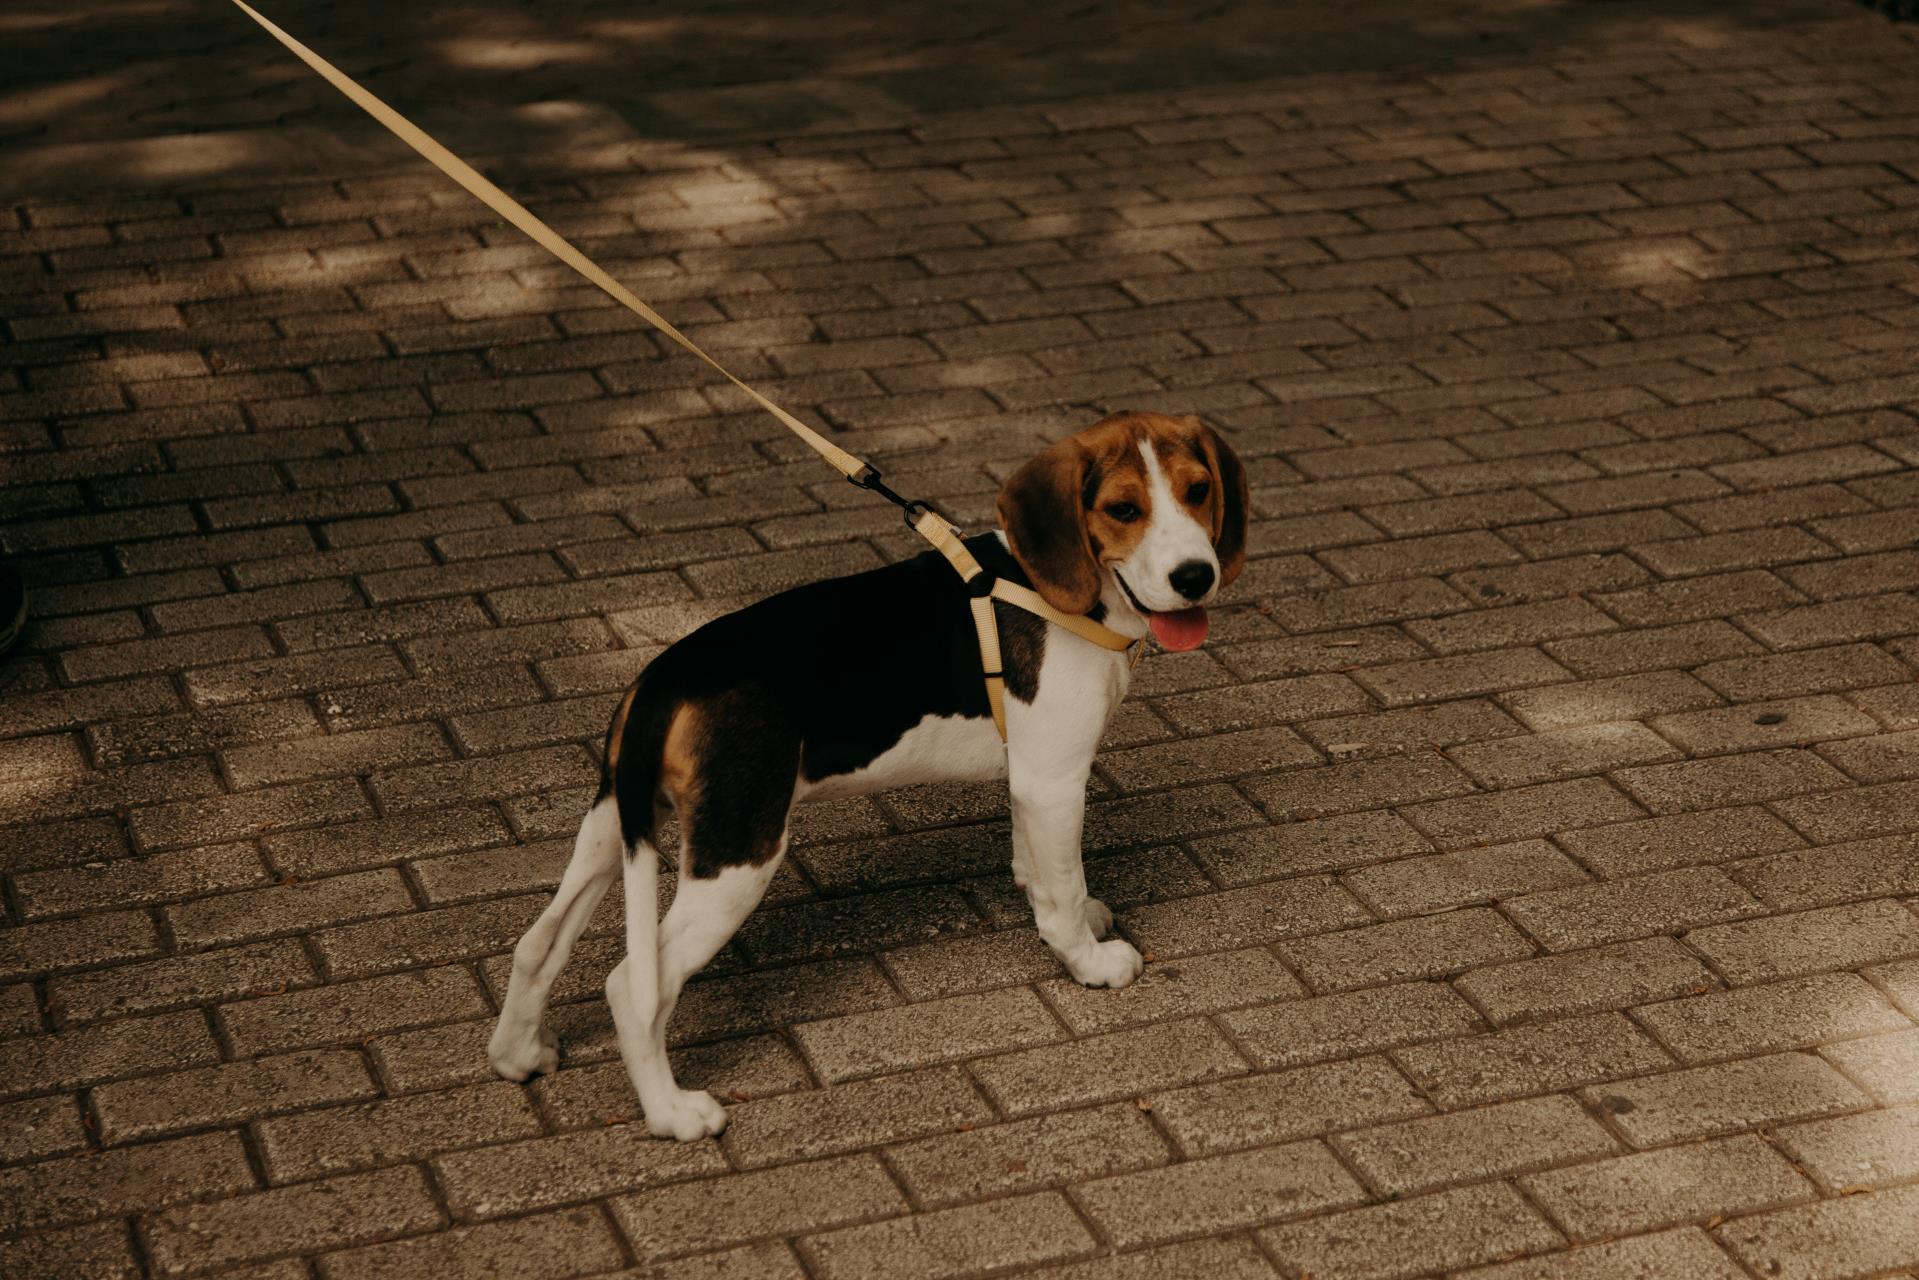 Beagle on a lead with a harness